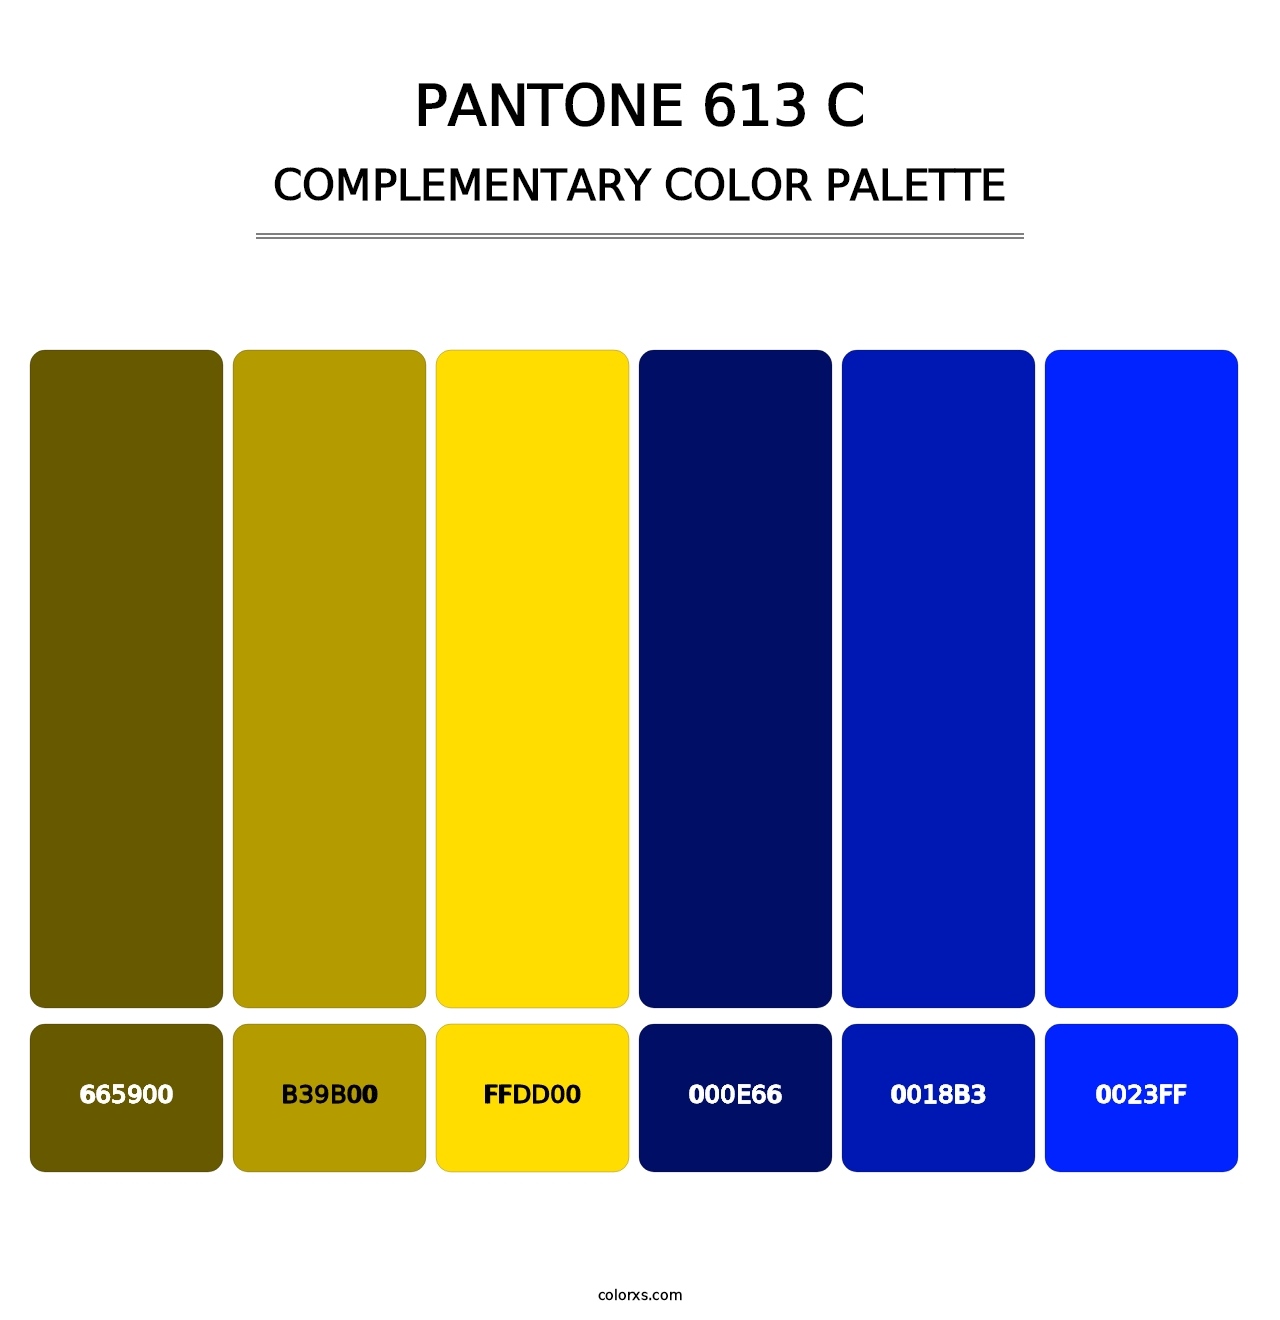 PANTONE 613 C - Complementary Color Palette